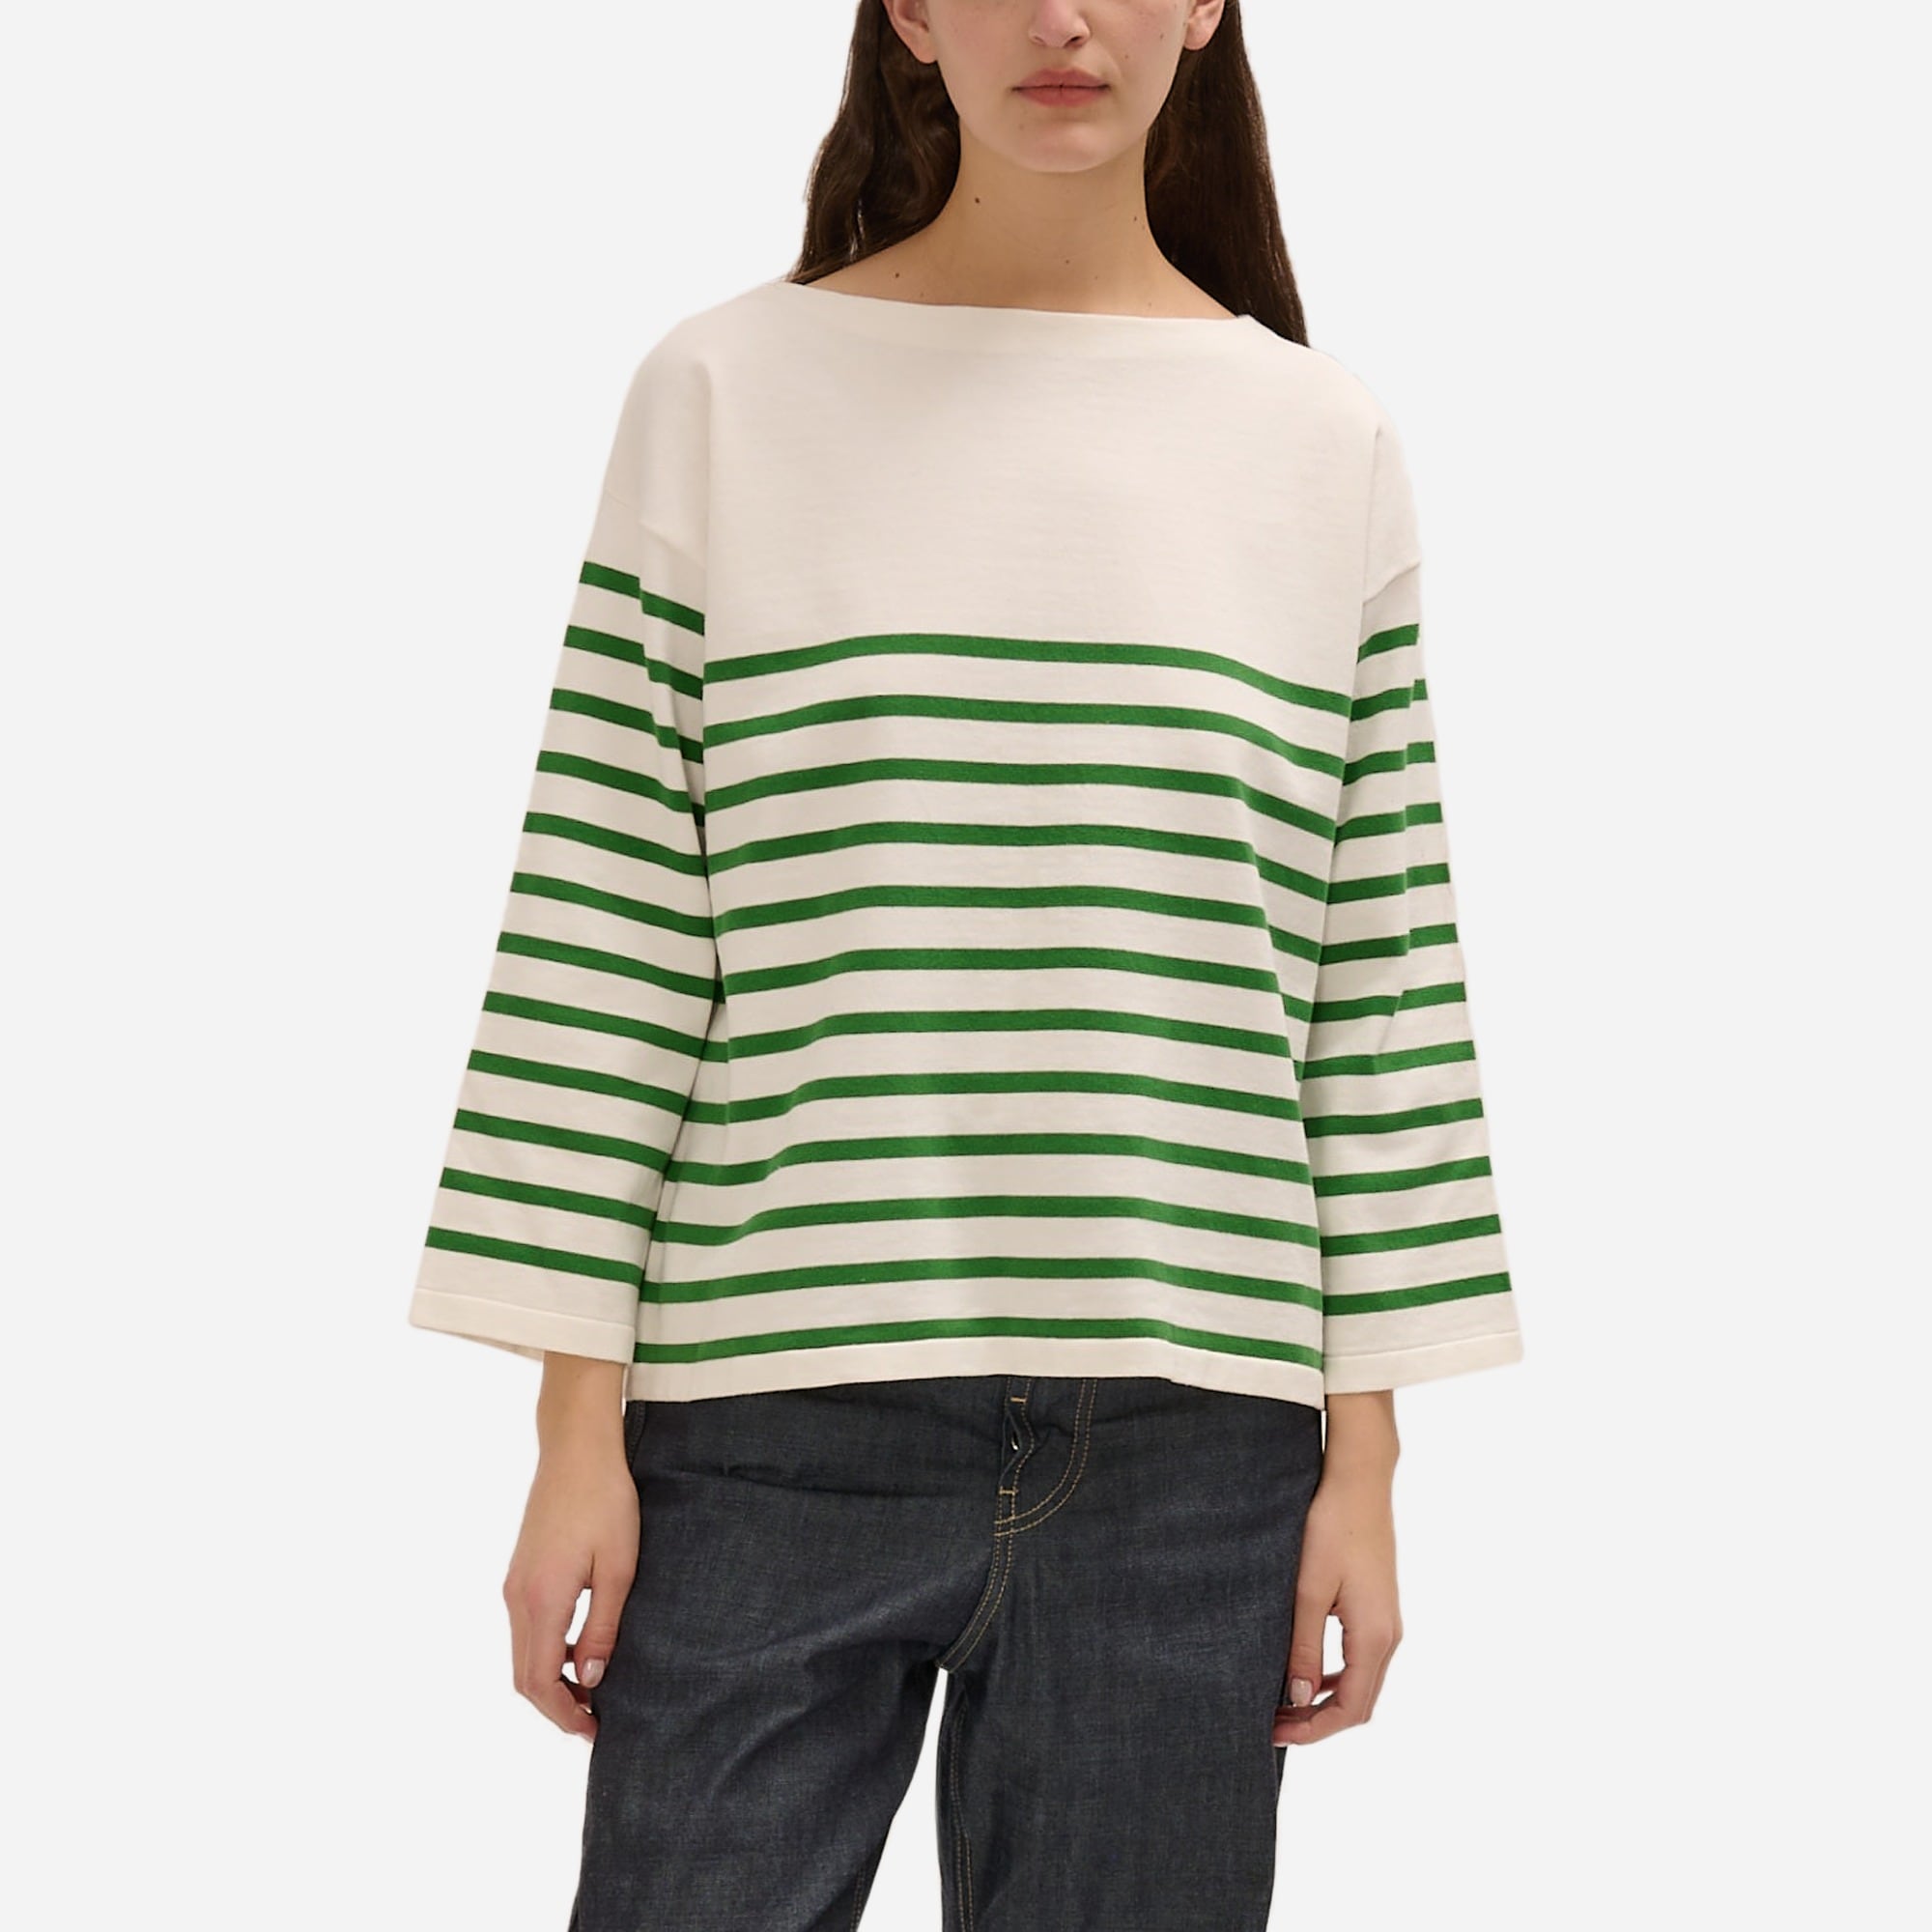  DEMYLEE New York&trade; Barid striped sweater